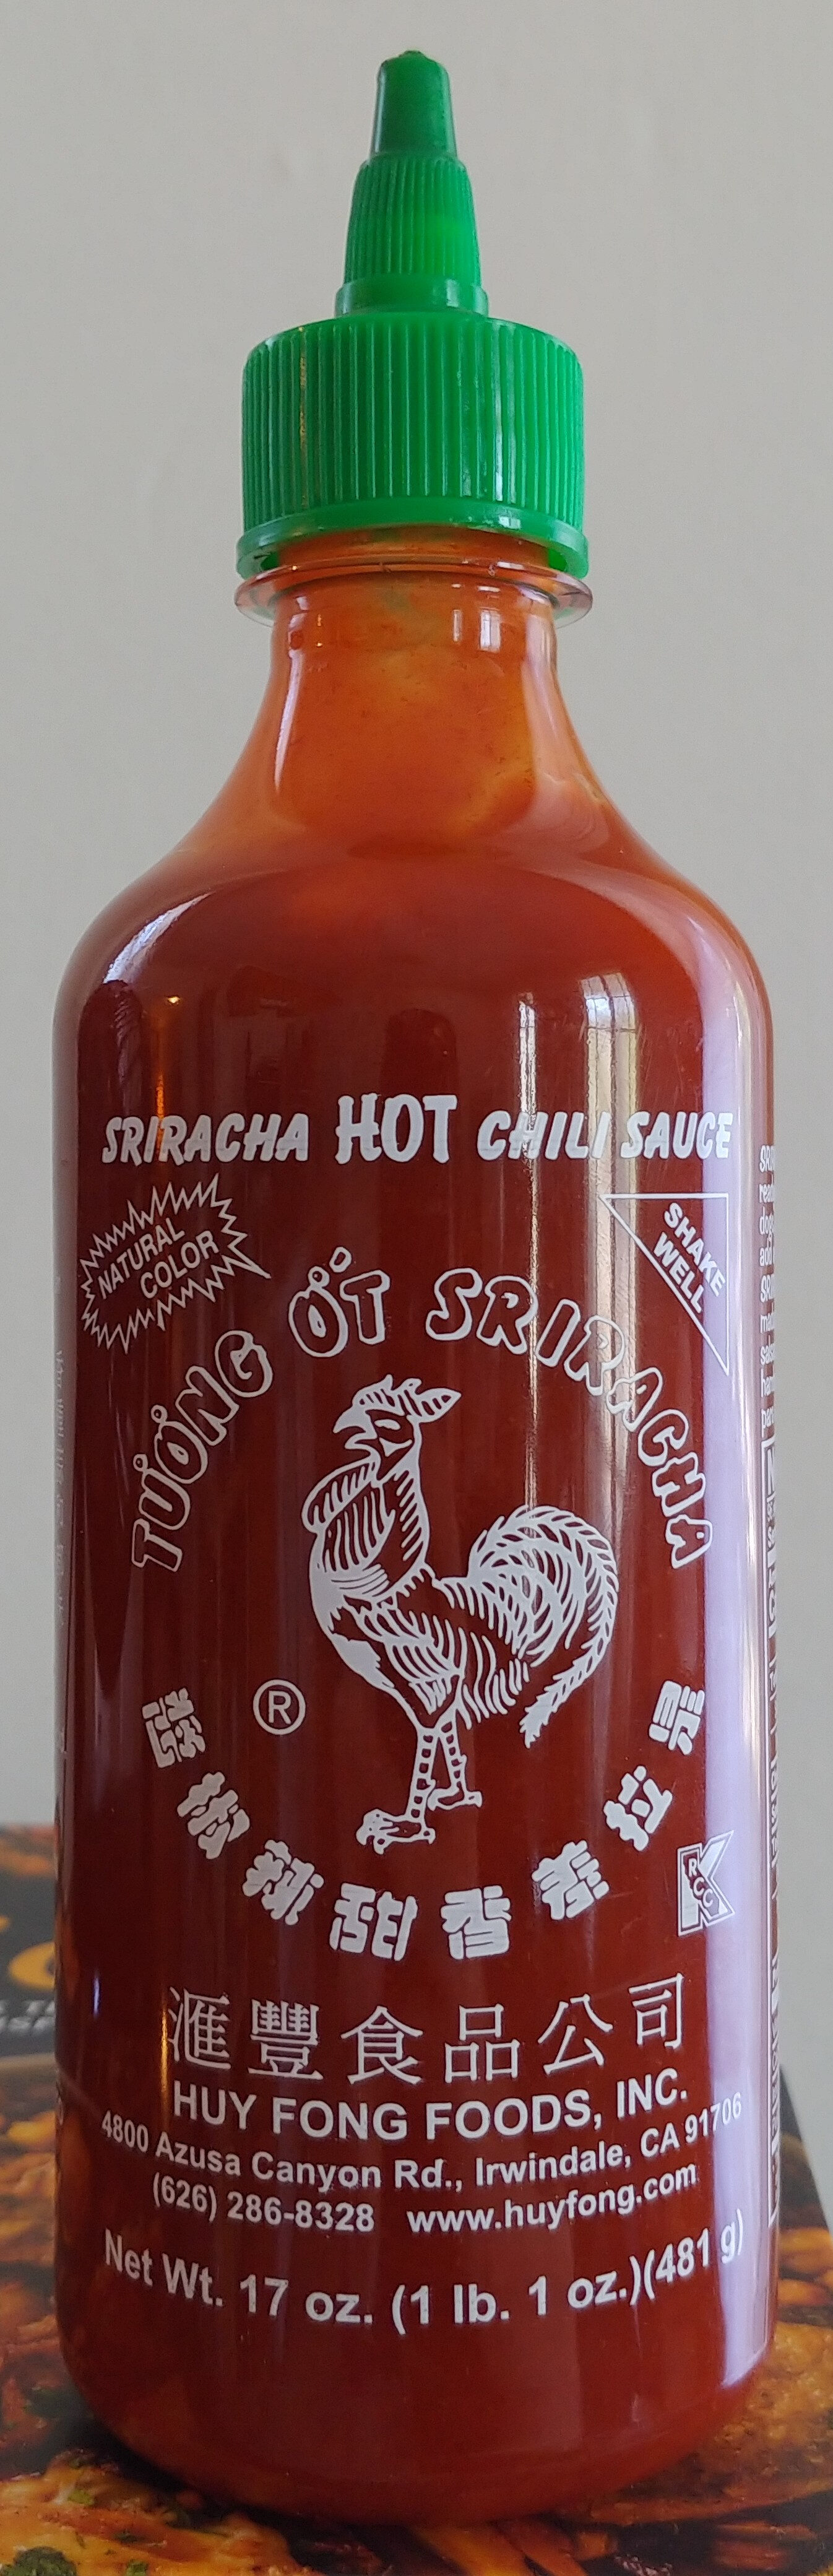 Sriracha hot chili sauce - Product - en